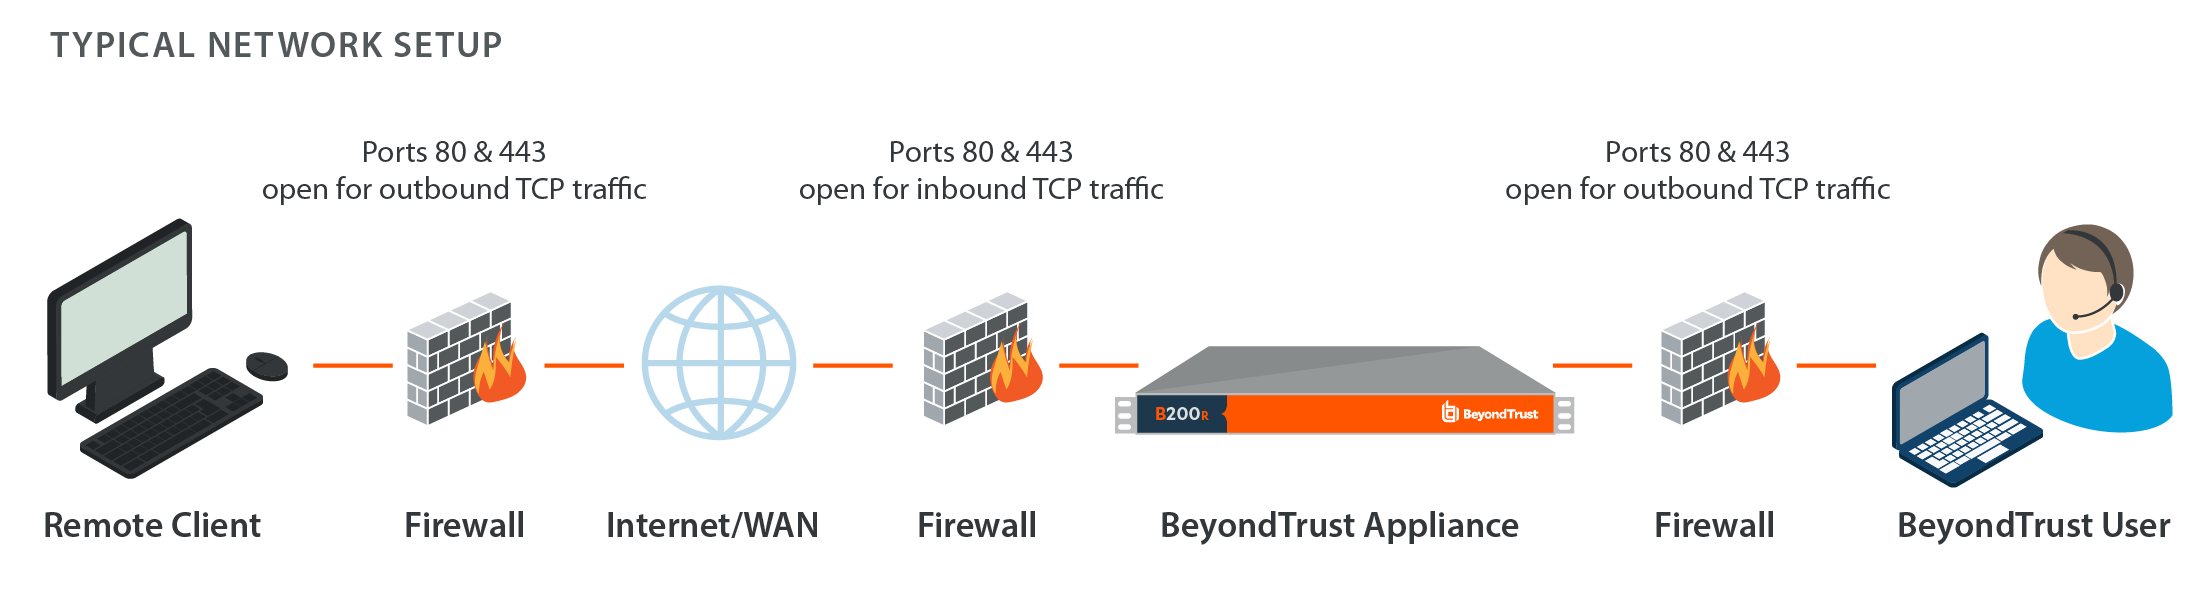 retrospect client firewall port